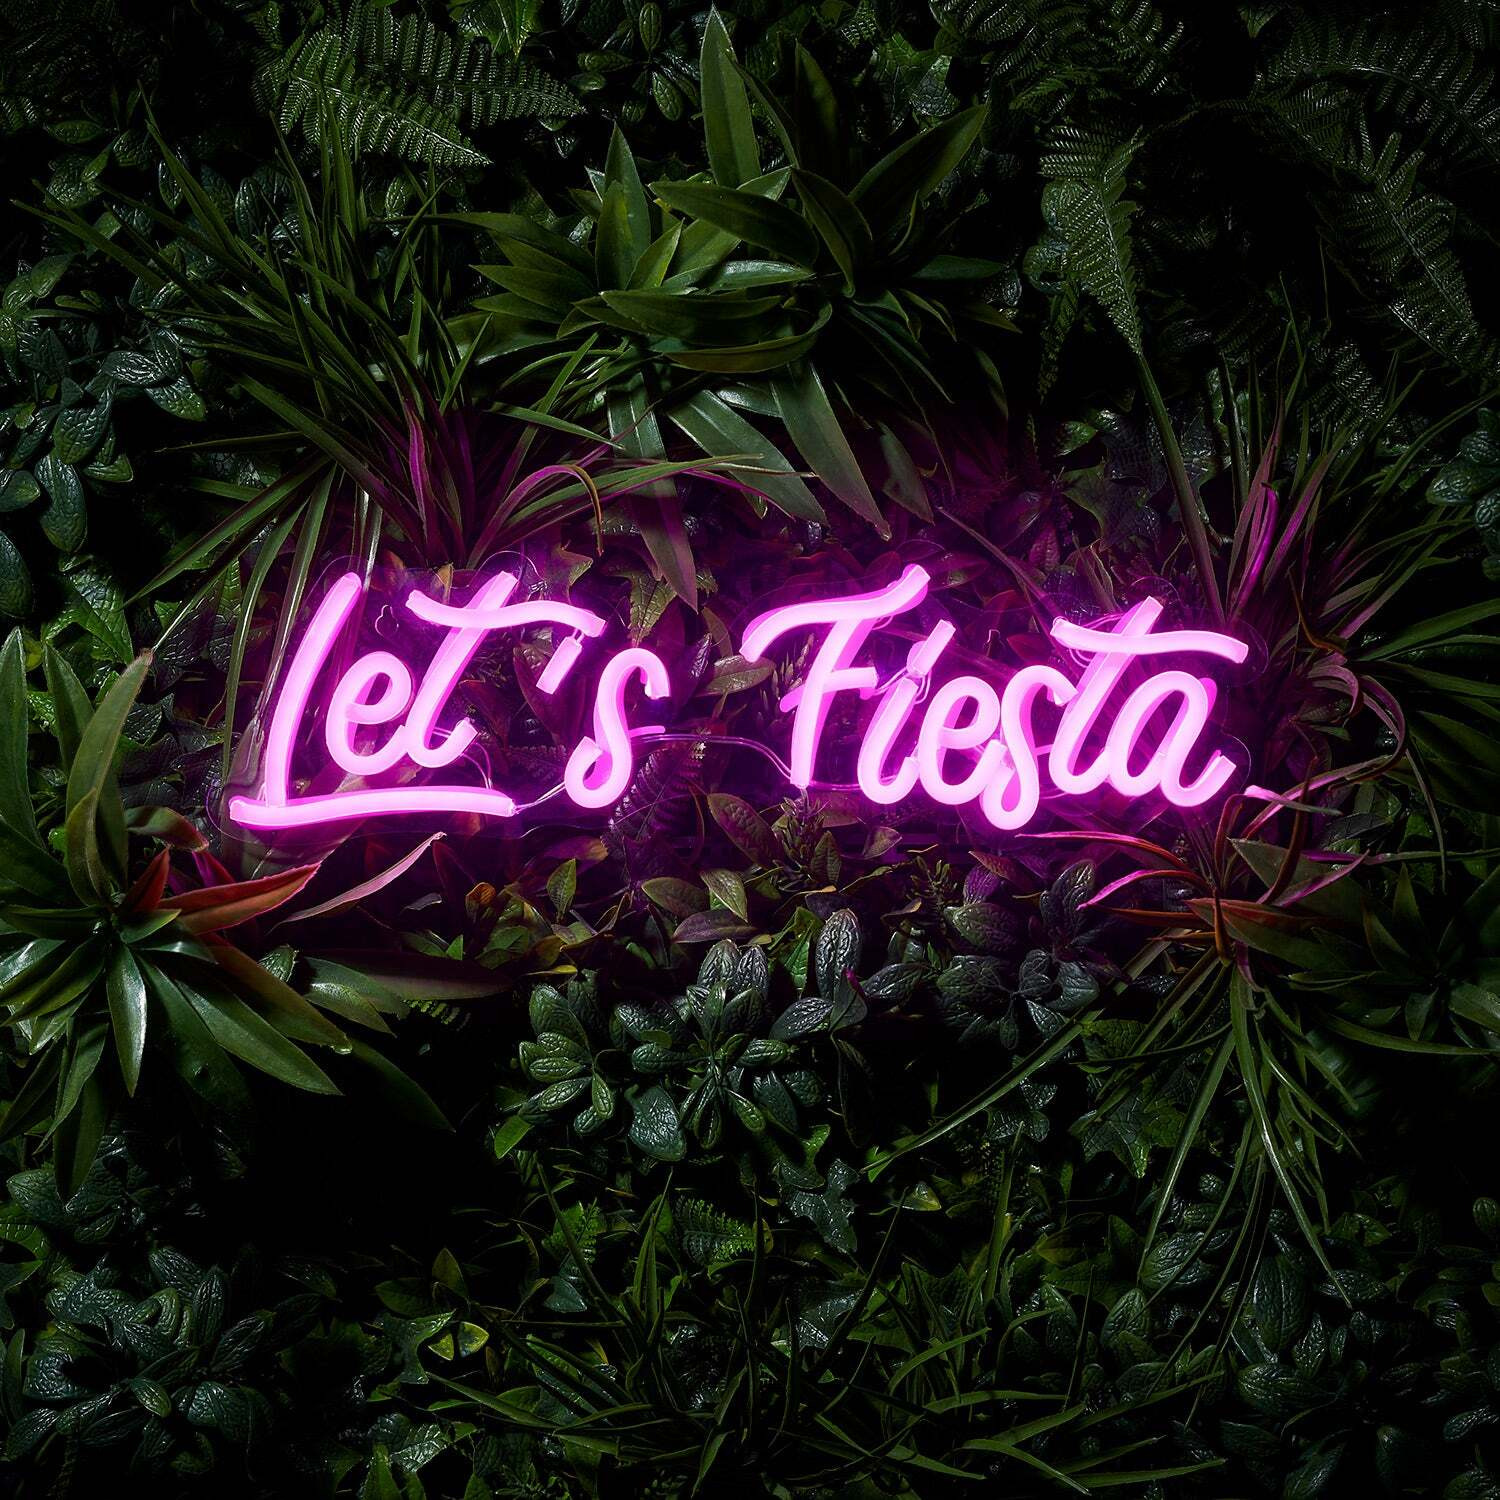 Let's Fiesta Neon Wall Light - image 1